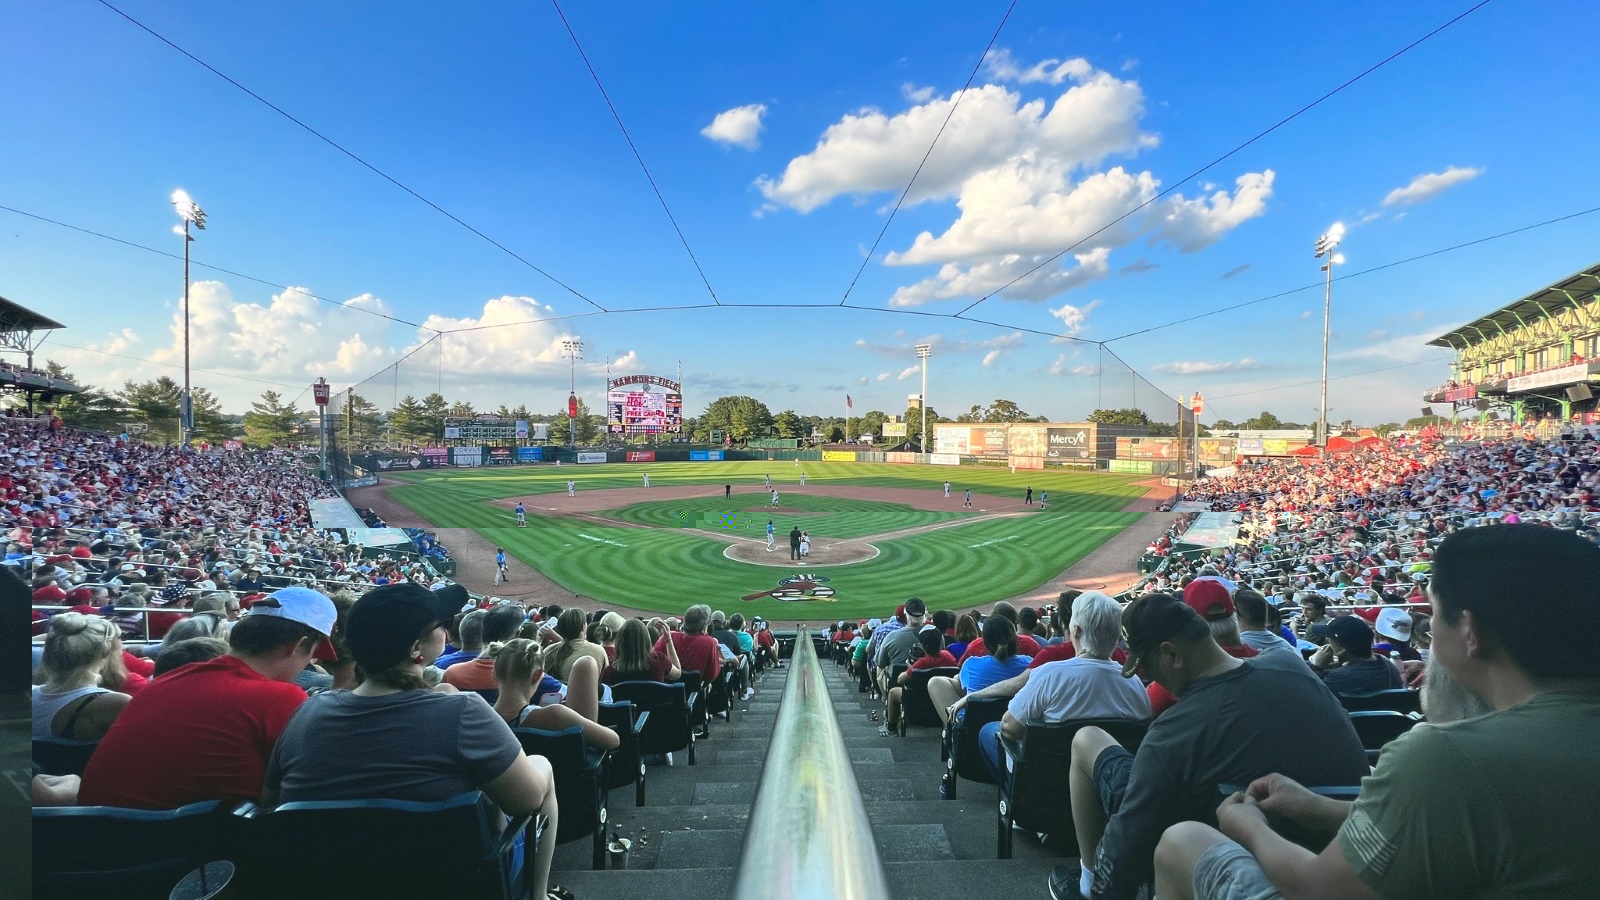 Fans watch a minor league baseball game at Hammons Field in Springfield, Missouri